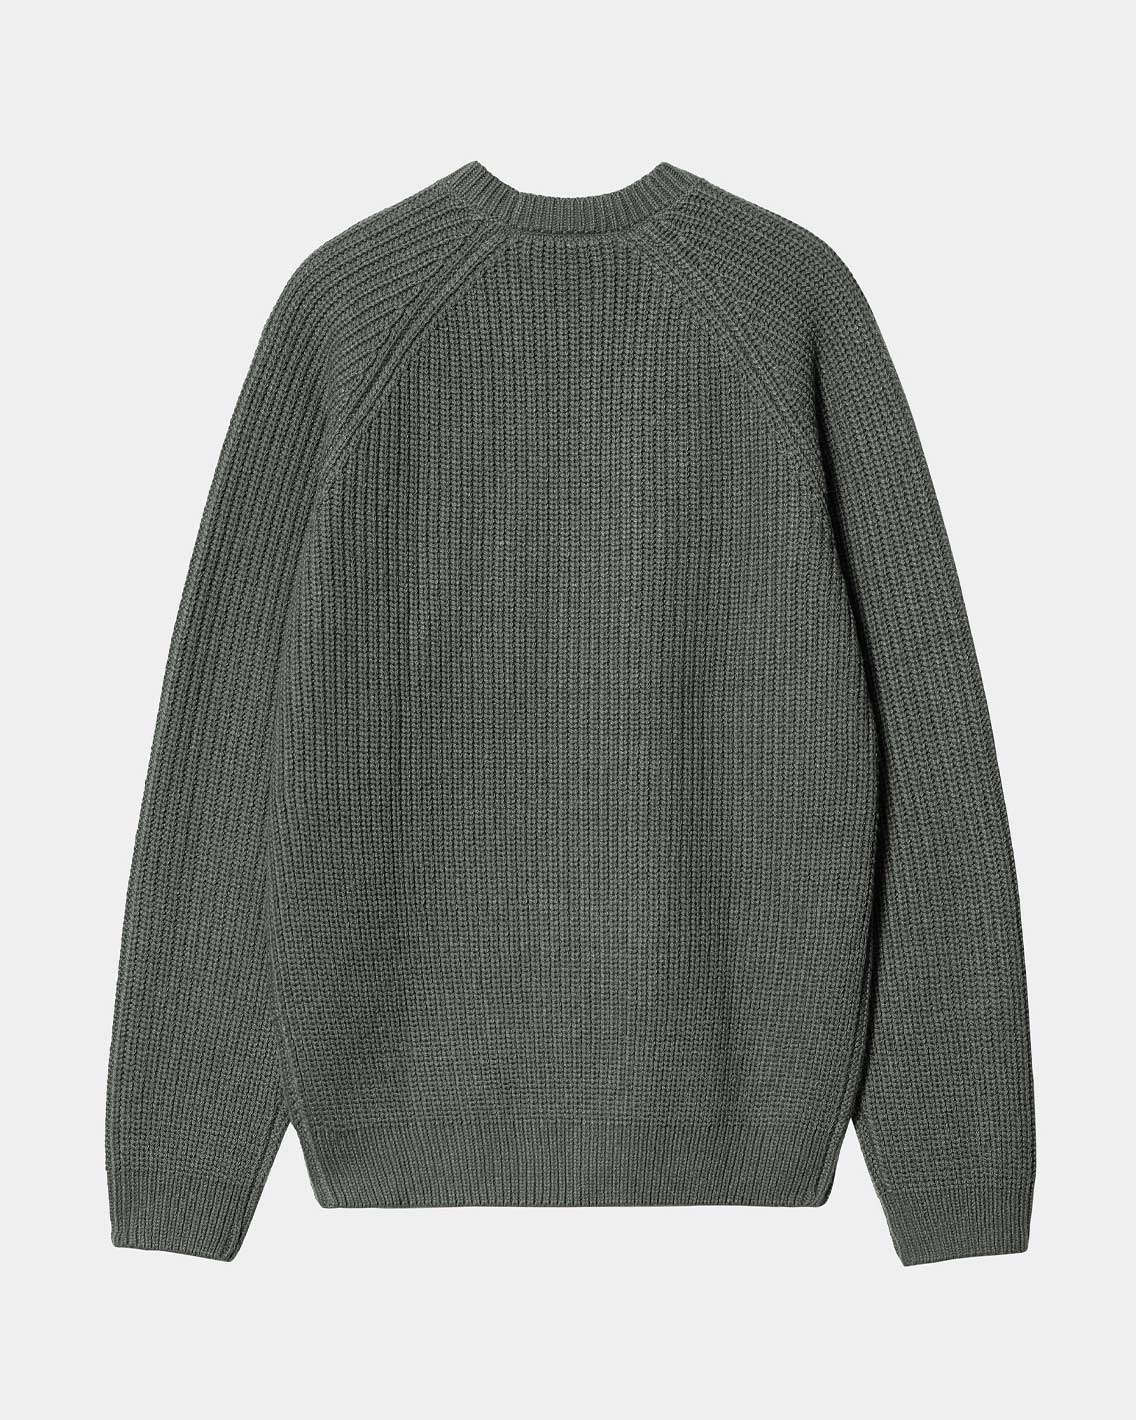 Carhartt - Forth Sweater - Smoke Green